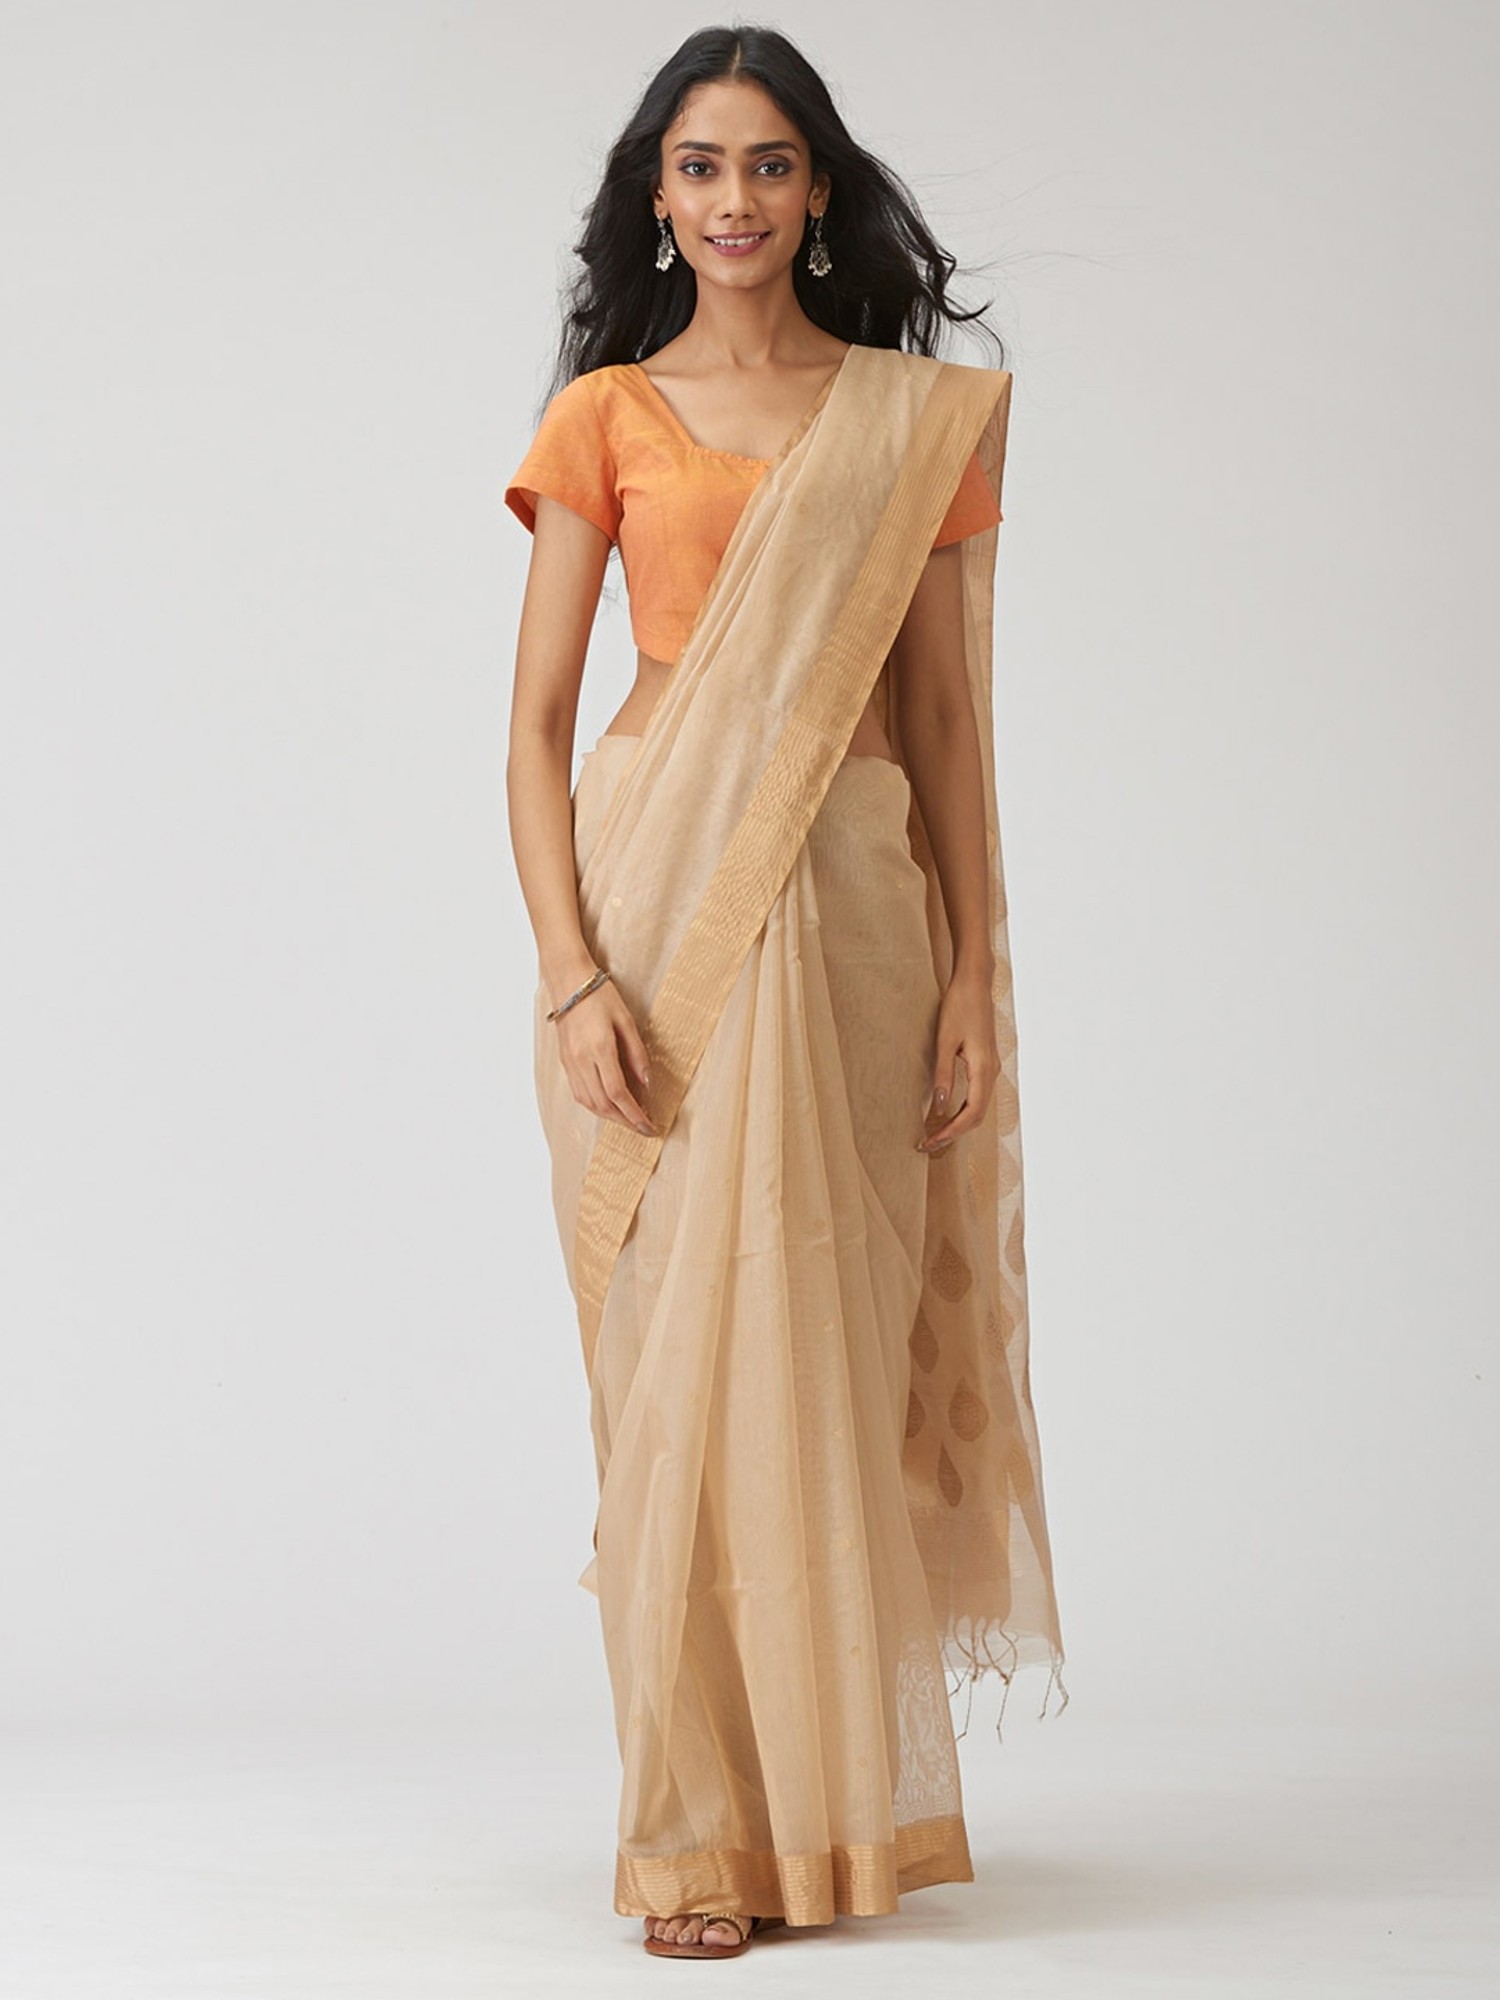 Anushka Sharma's latest saree is reminiscent of her wedding reception look  | VOGUE India